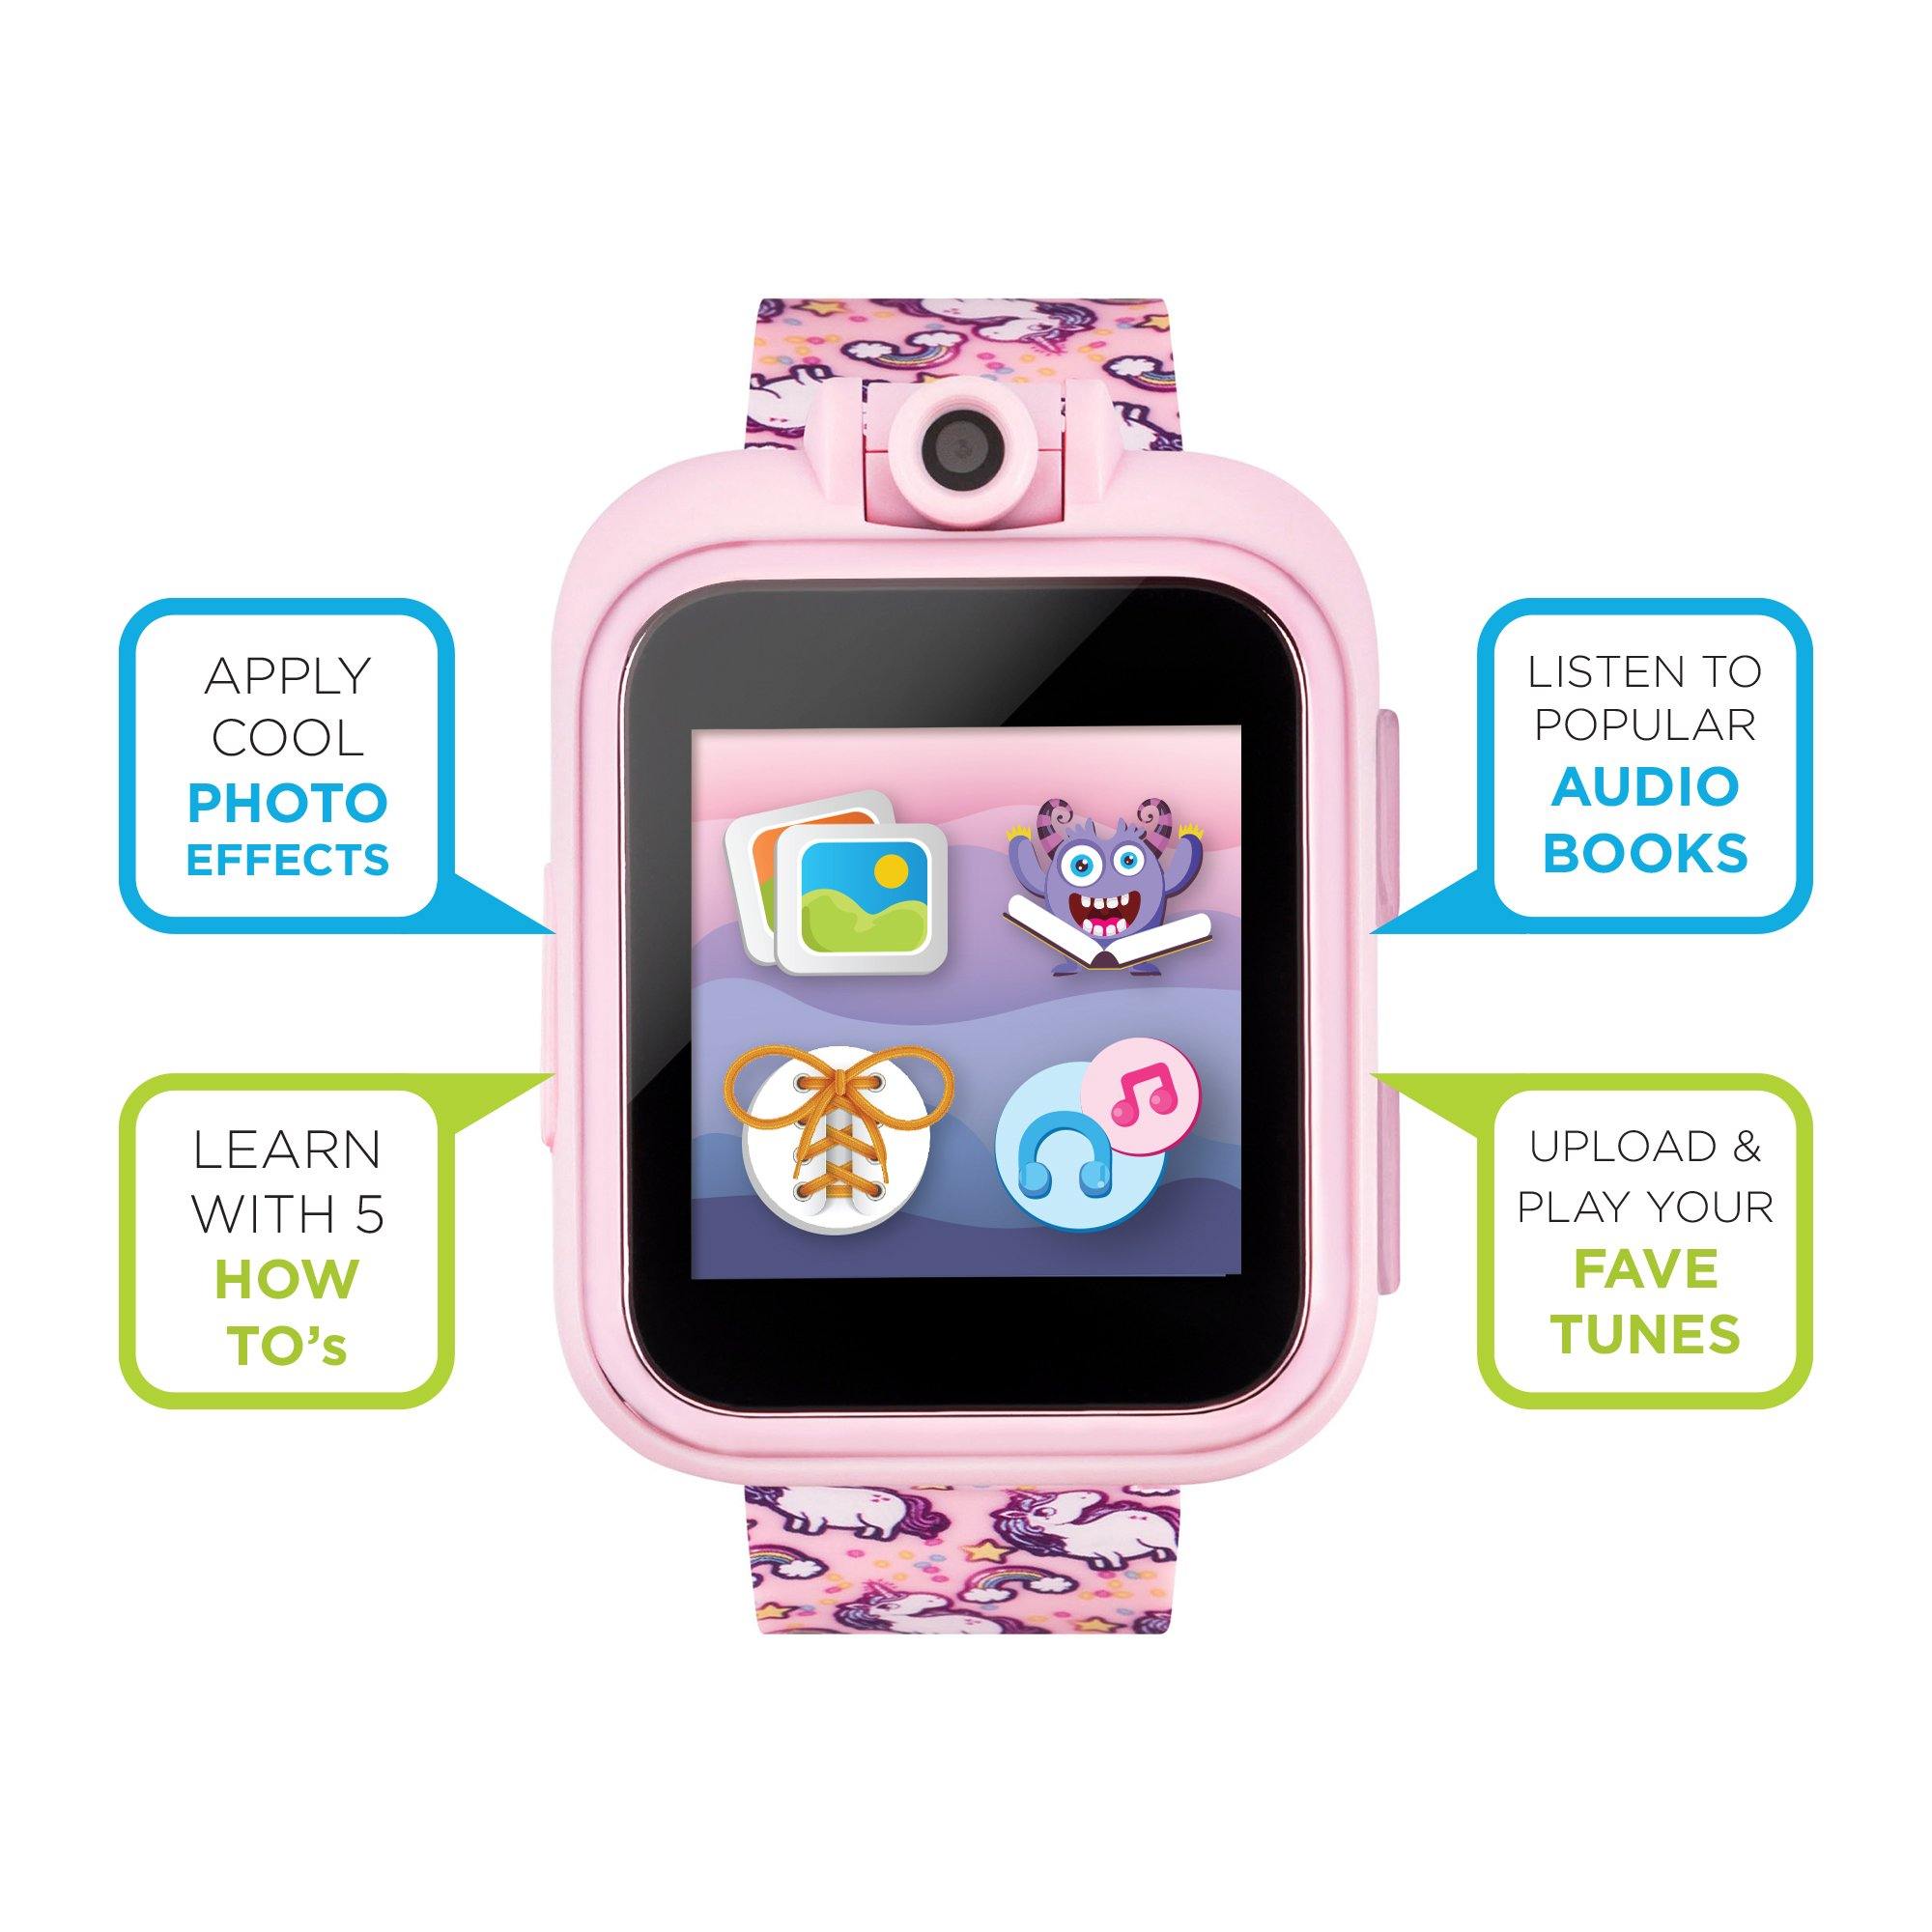 PlayZoom 2 Kids Smartwatch: Pink Unicorn Print affordable smart watch